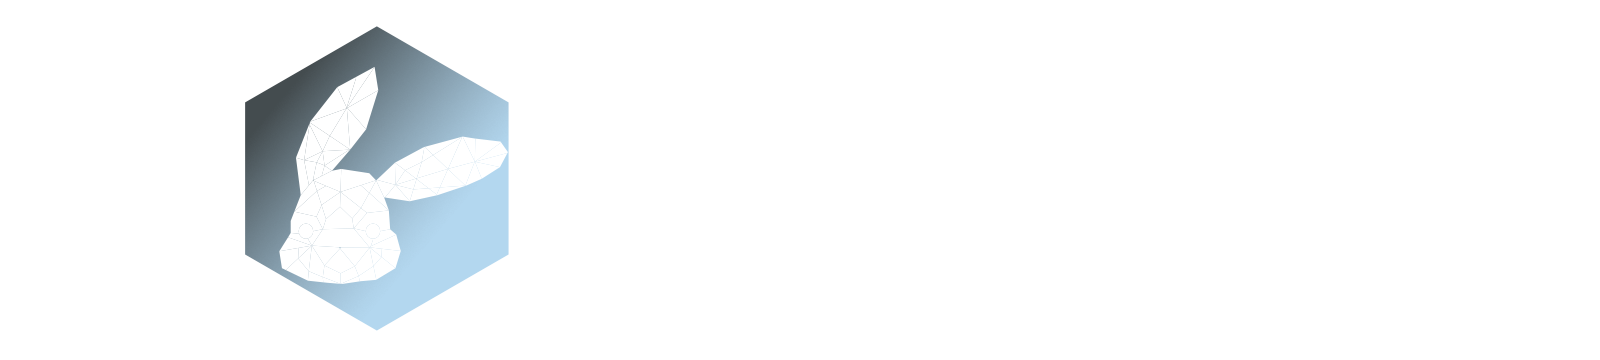 Unishar-ユニシャー